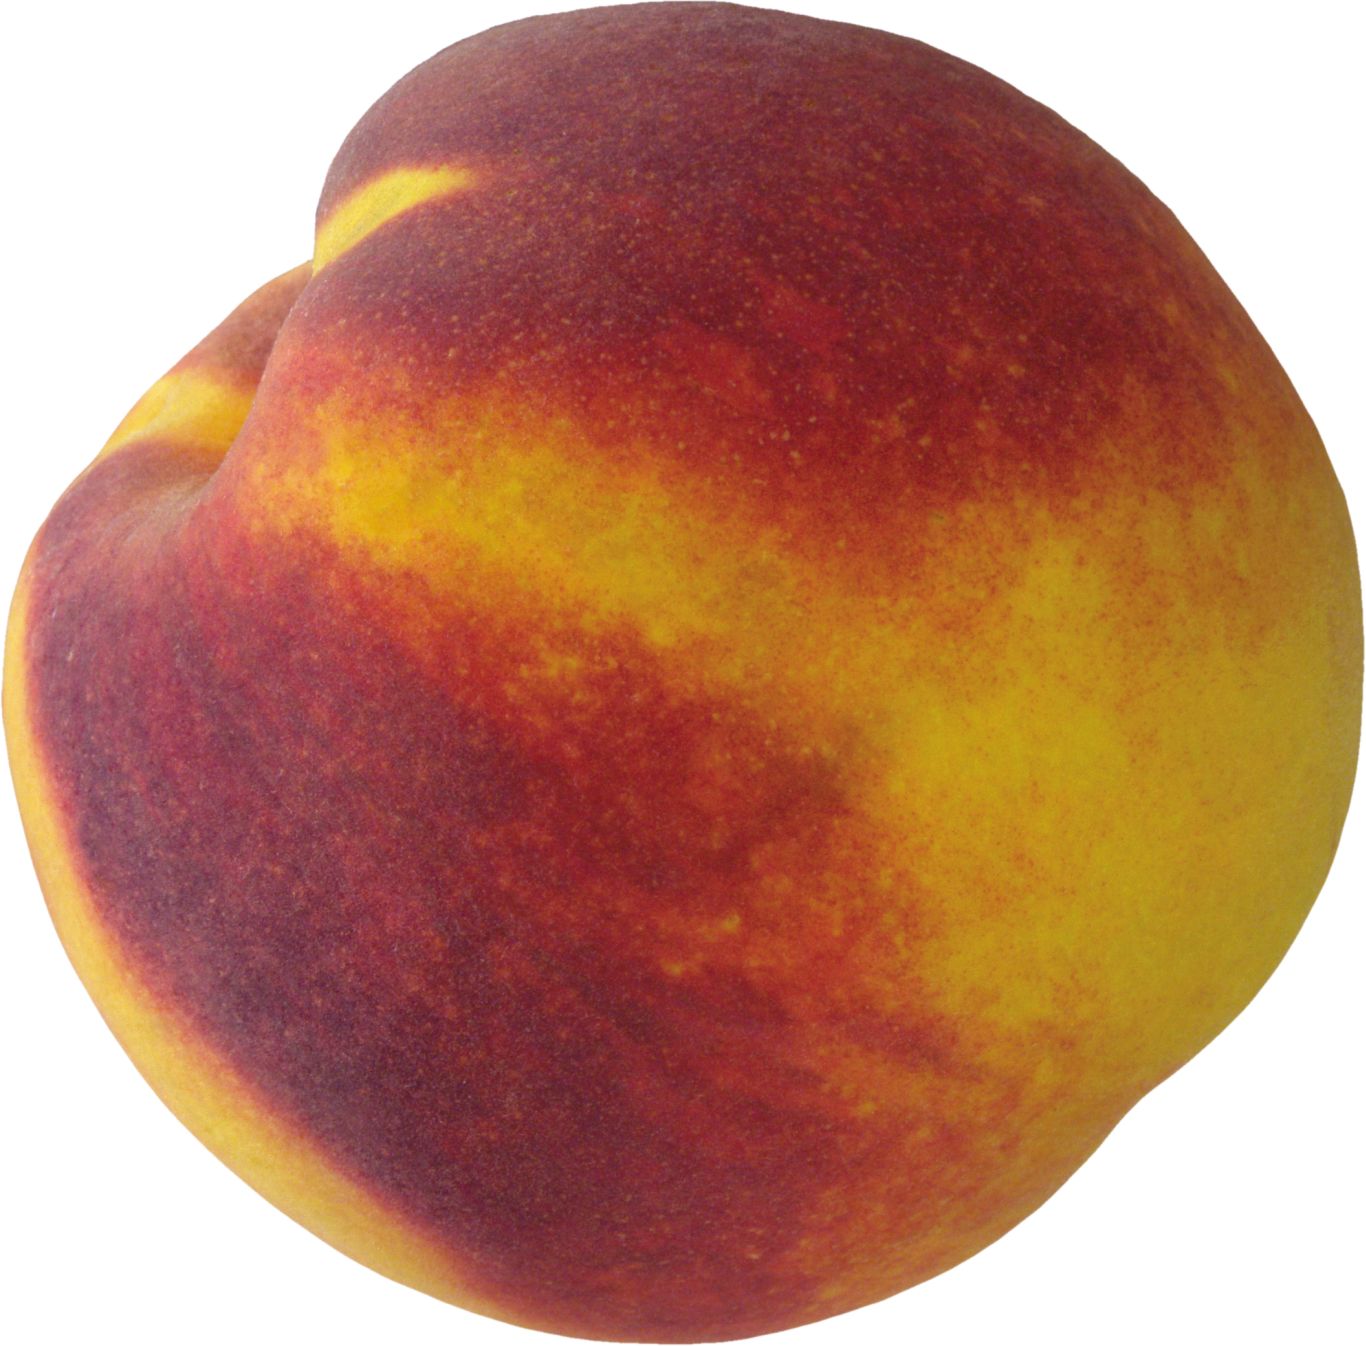 Peach PNG image    图片编号:4858